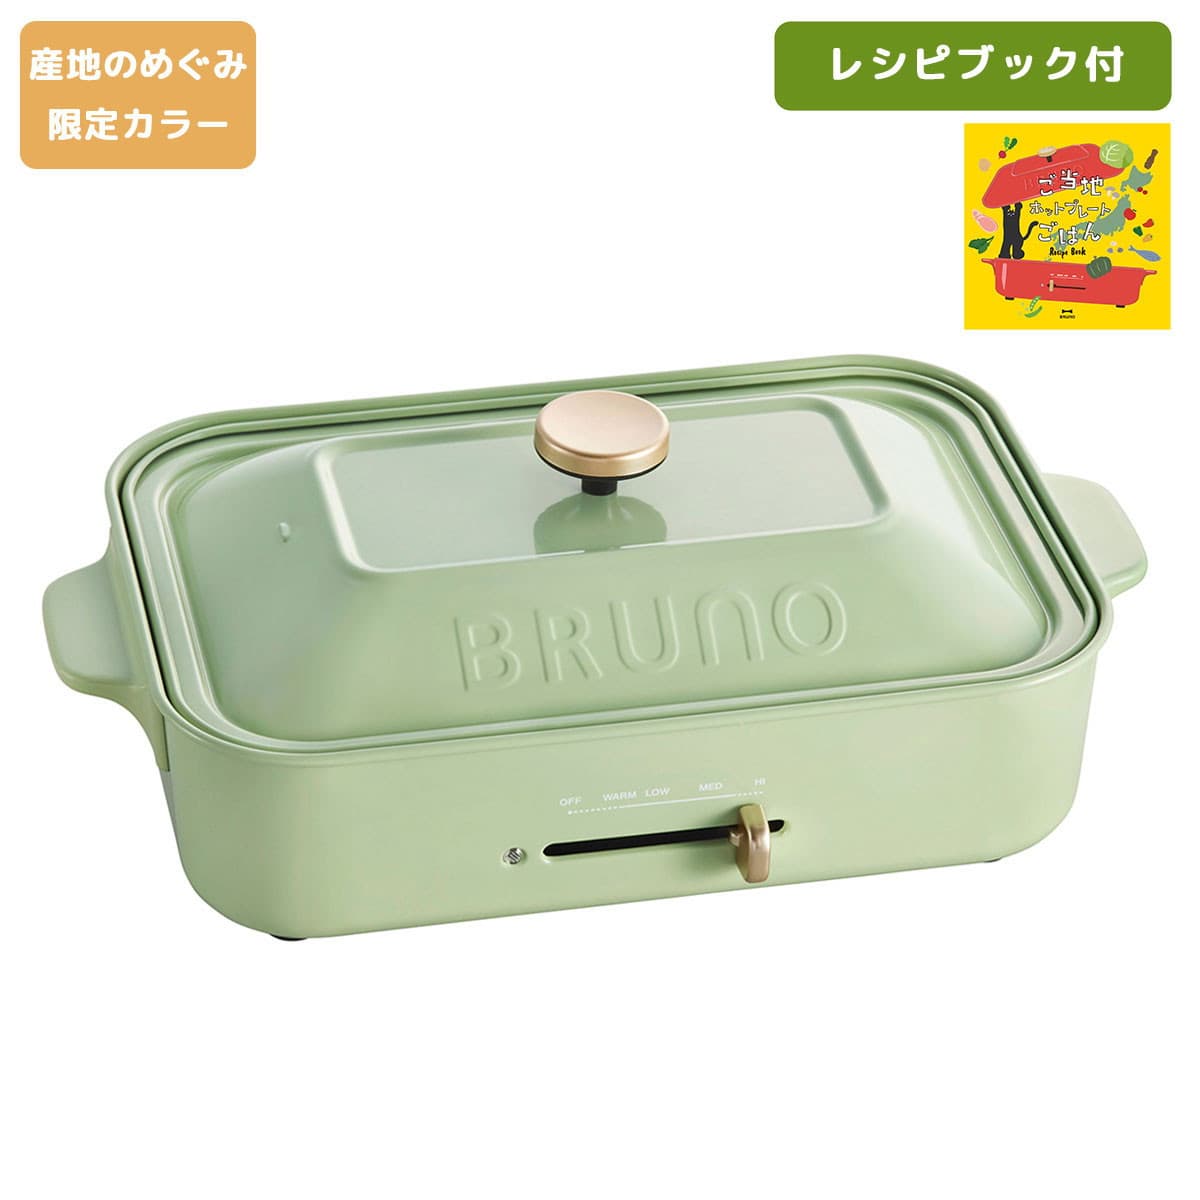 Bruno コンパクト ホットプレート セージグリーン BOE021-SAGR - 食器